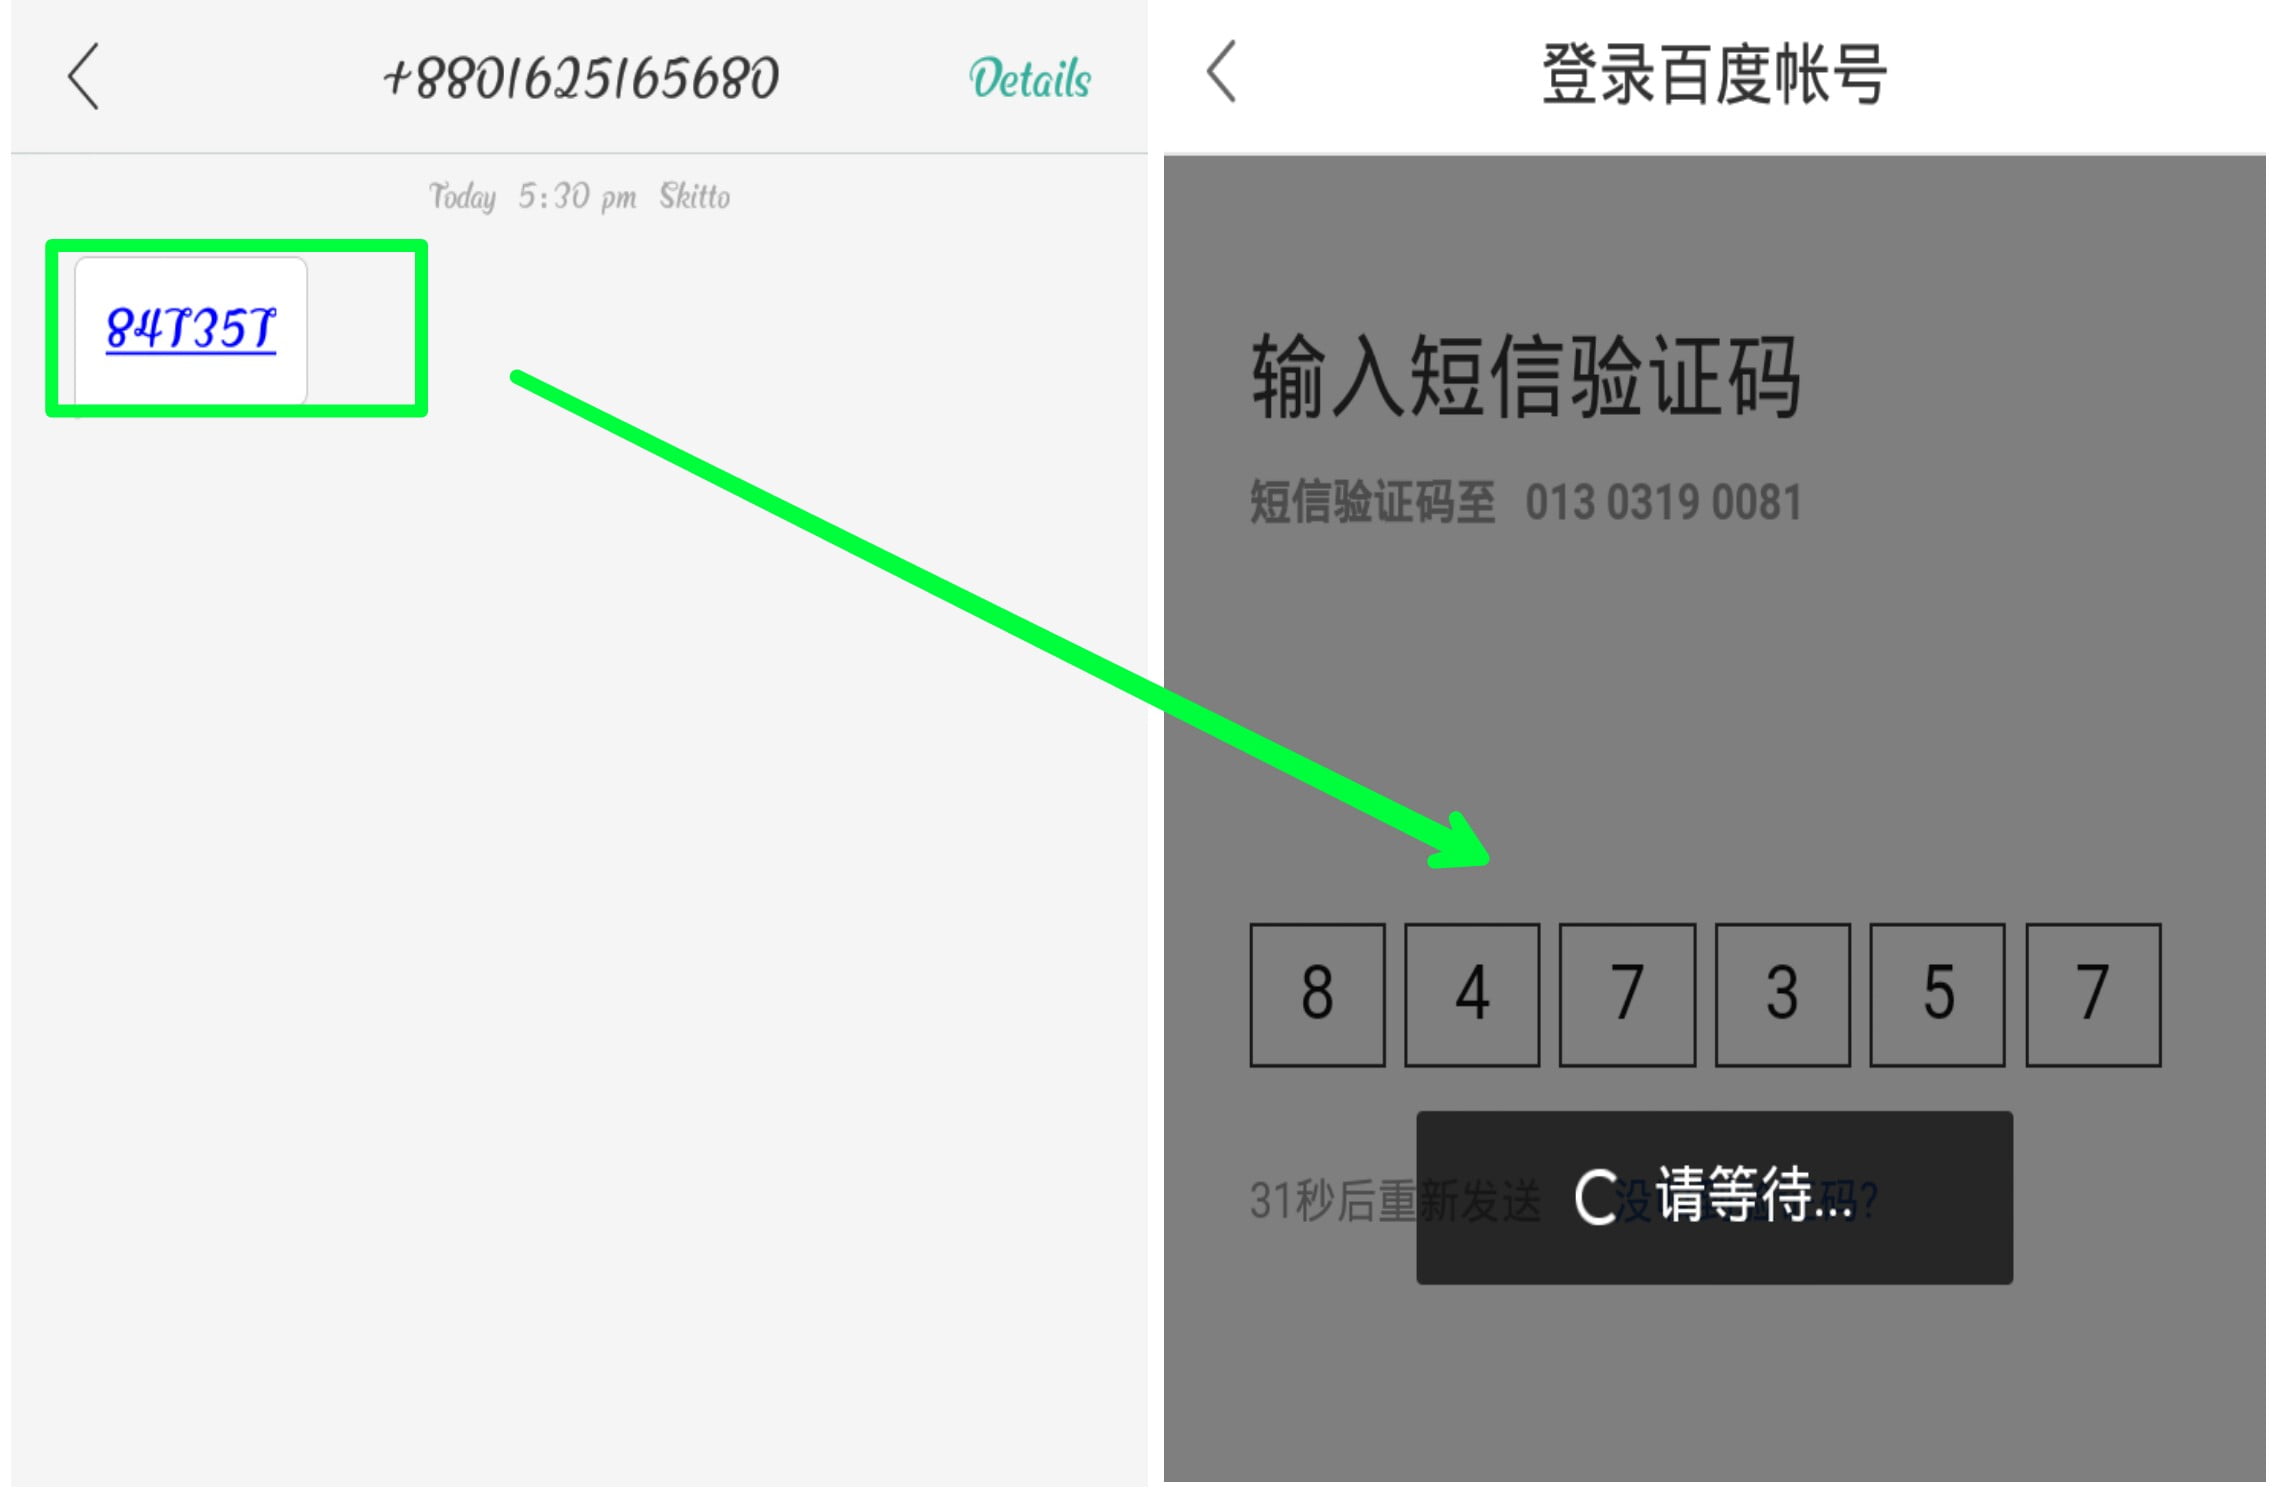 Baidu Verification Code